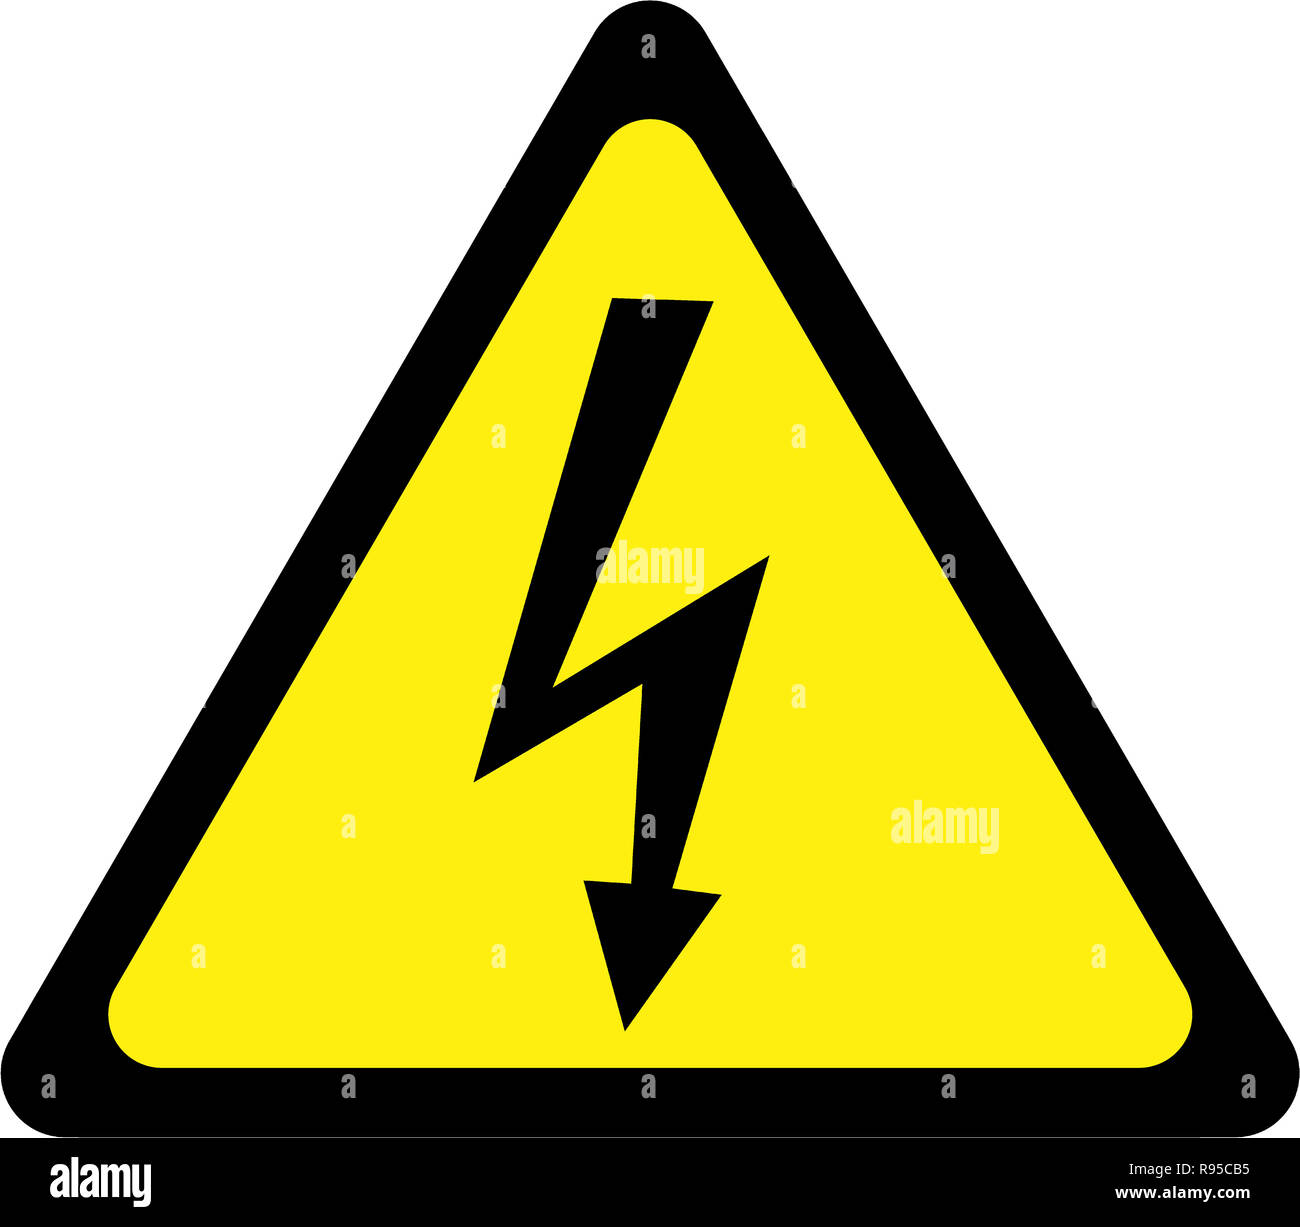 Warning sign with shock symbol Stock Photo